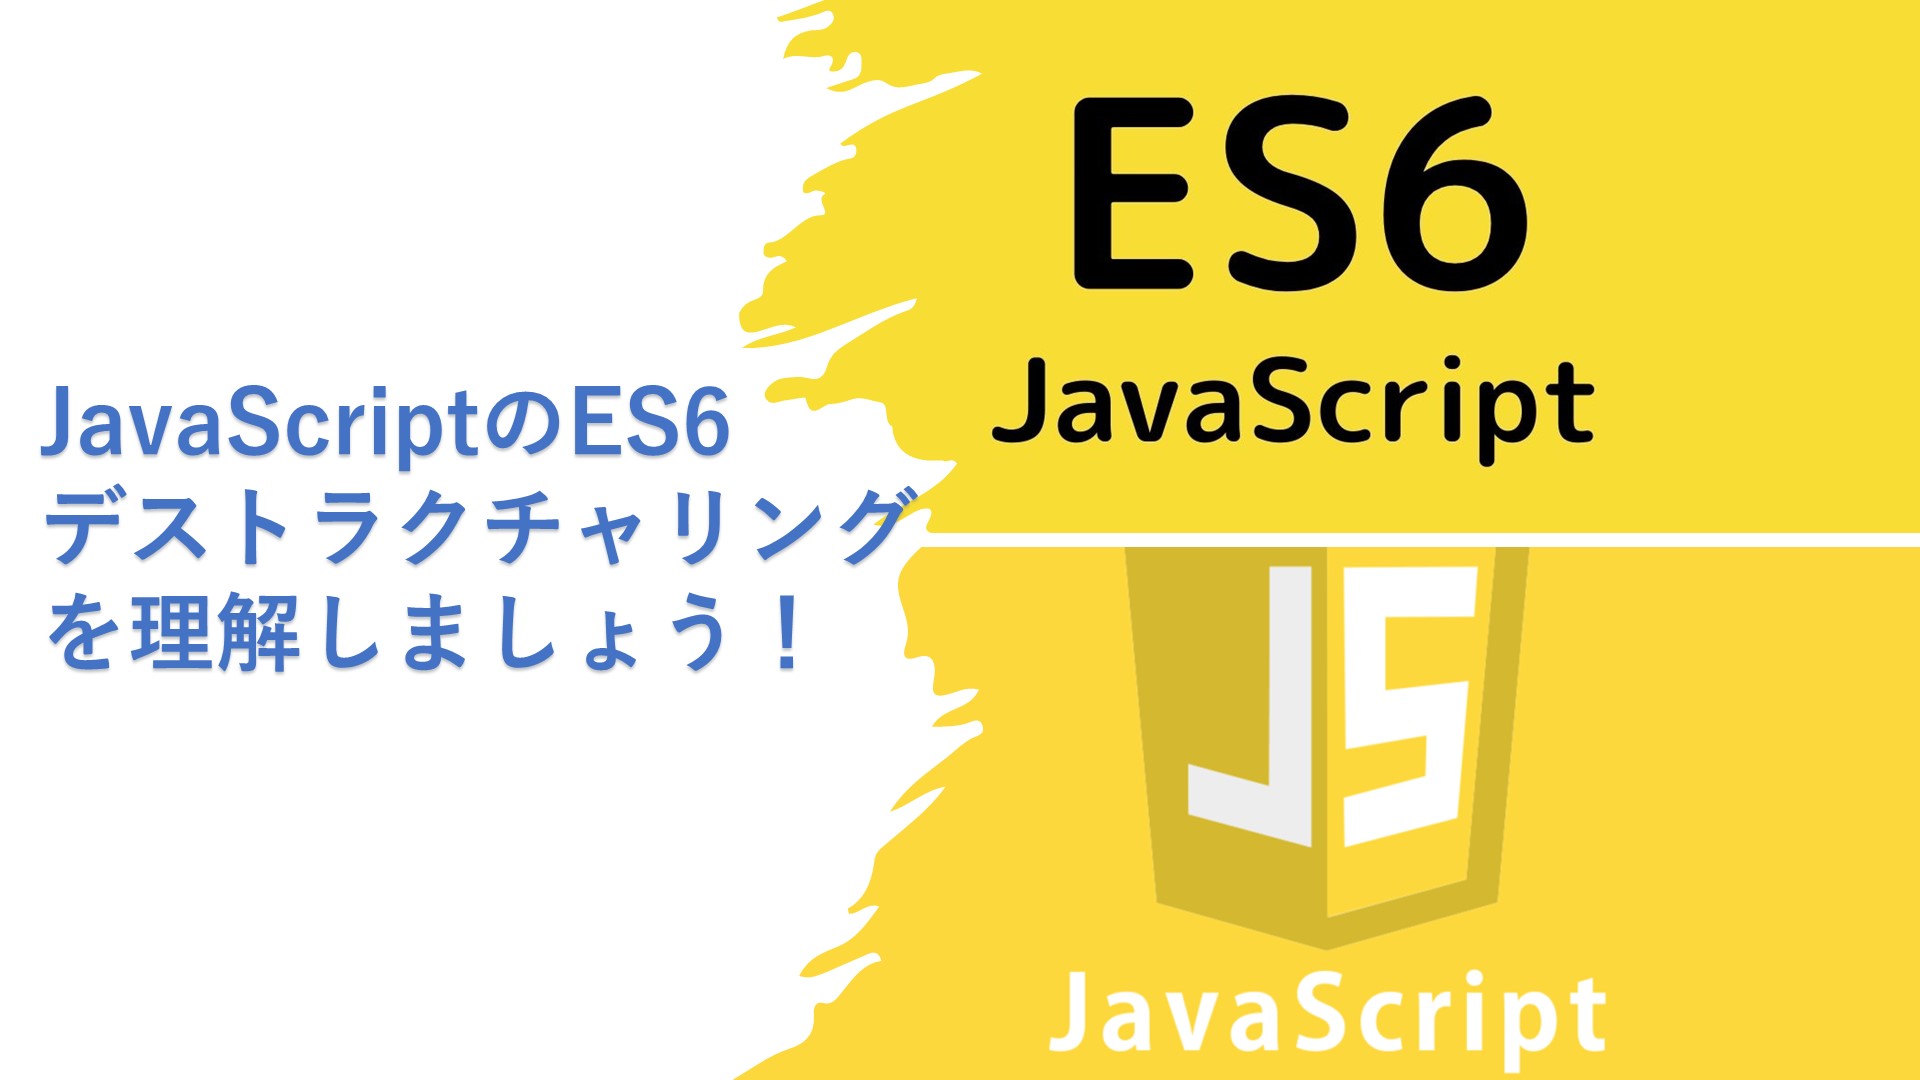 JavaScriptのES6デストラクチャリングを理解しましょう！